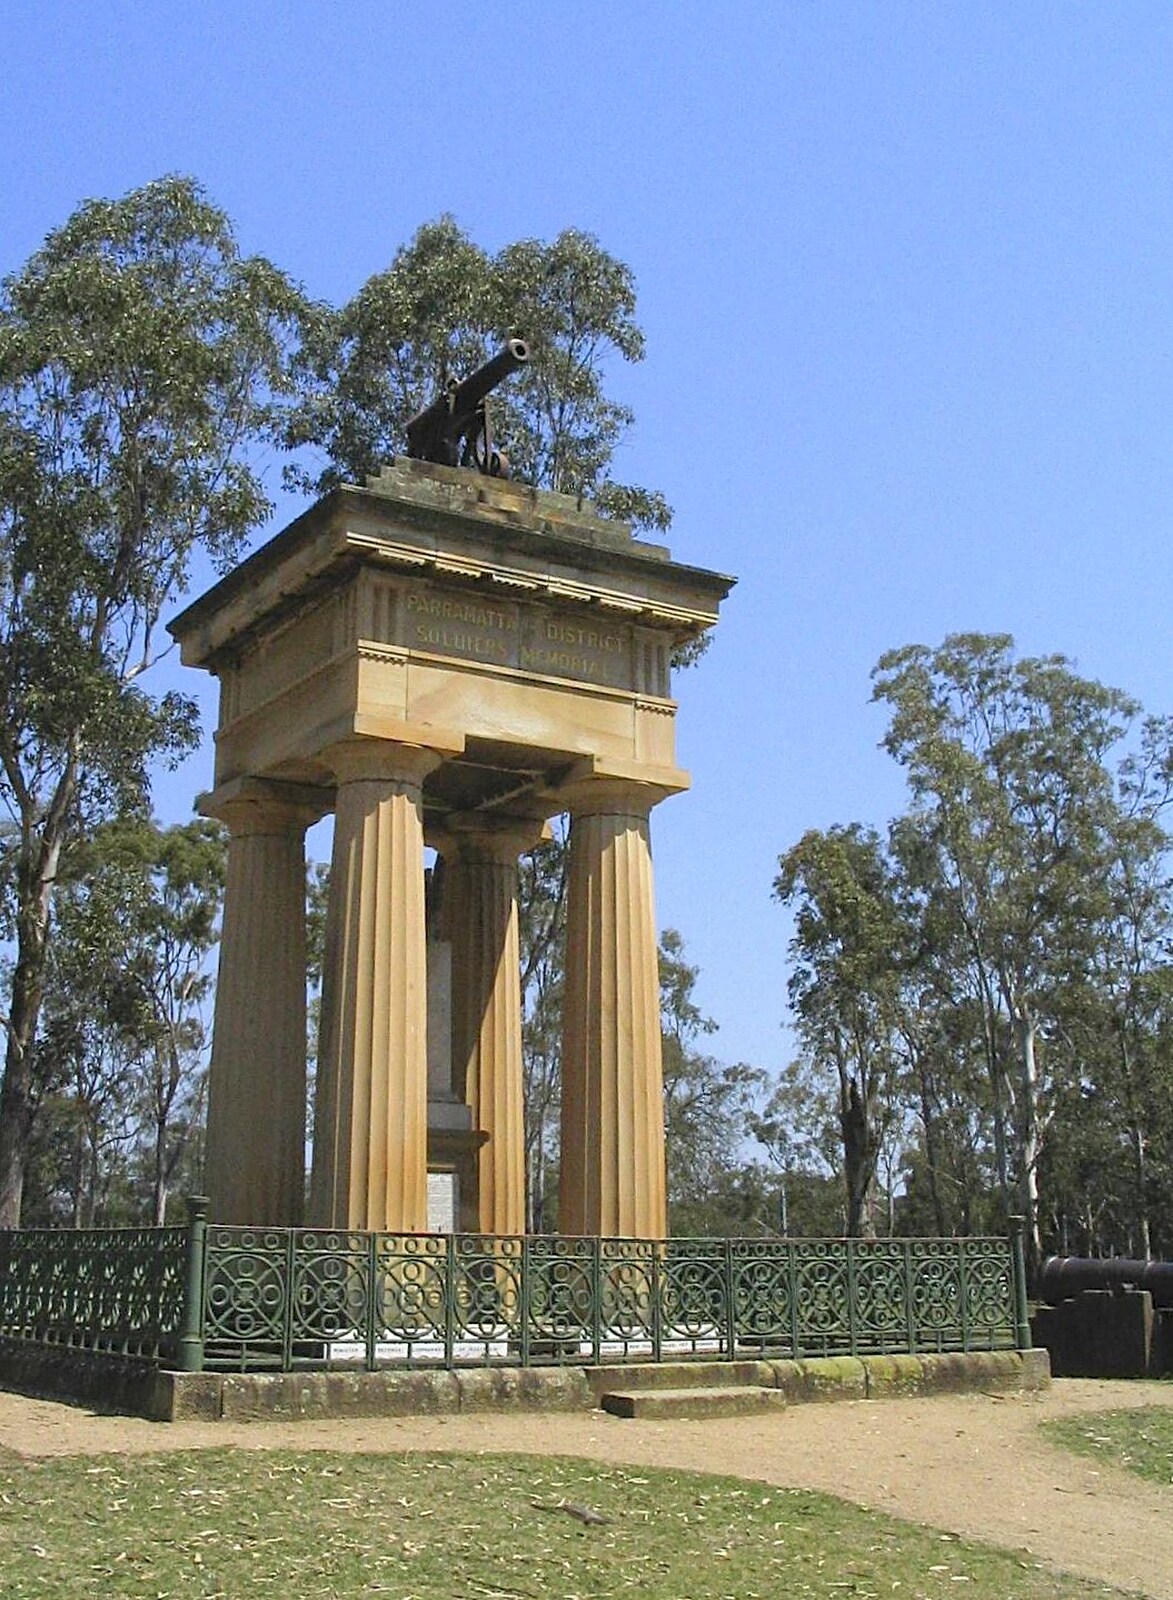 A Parramatta war memorial from Sydney, New South Wales, Australia - 10th October 2004